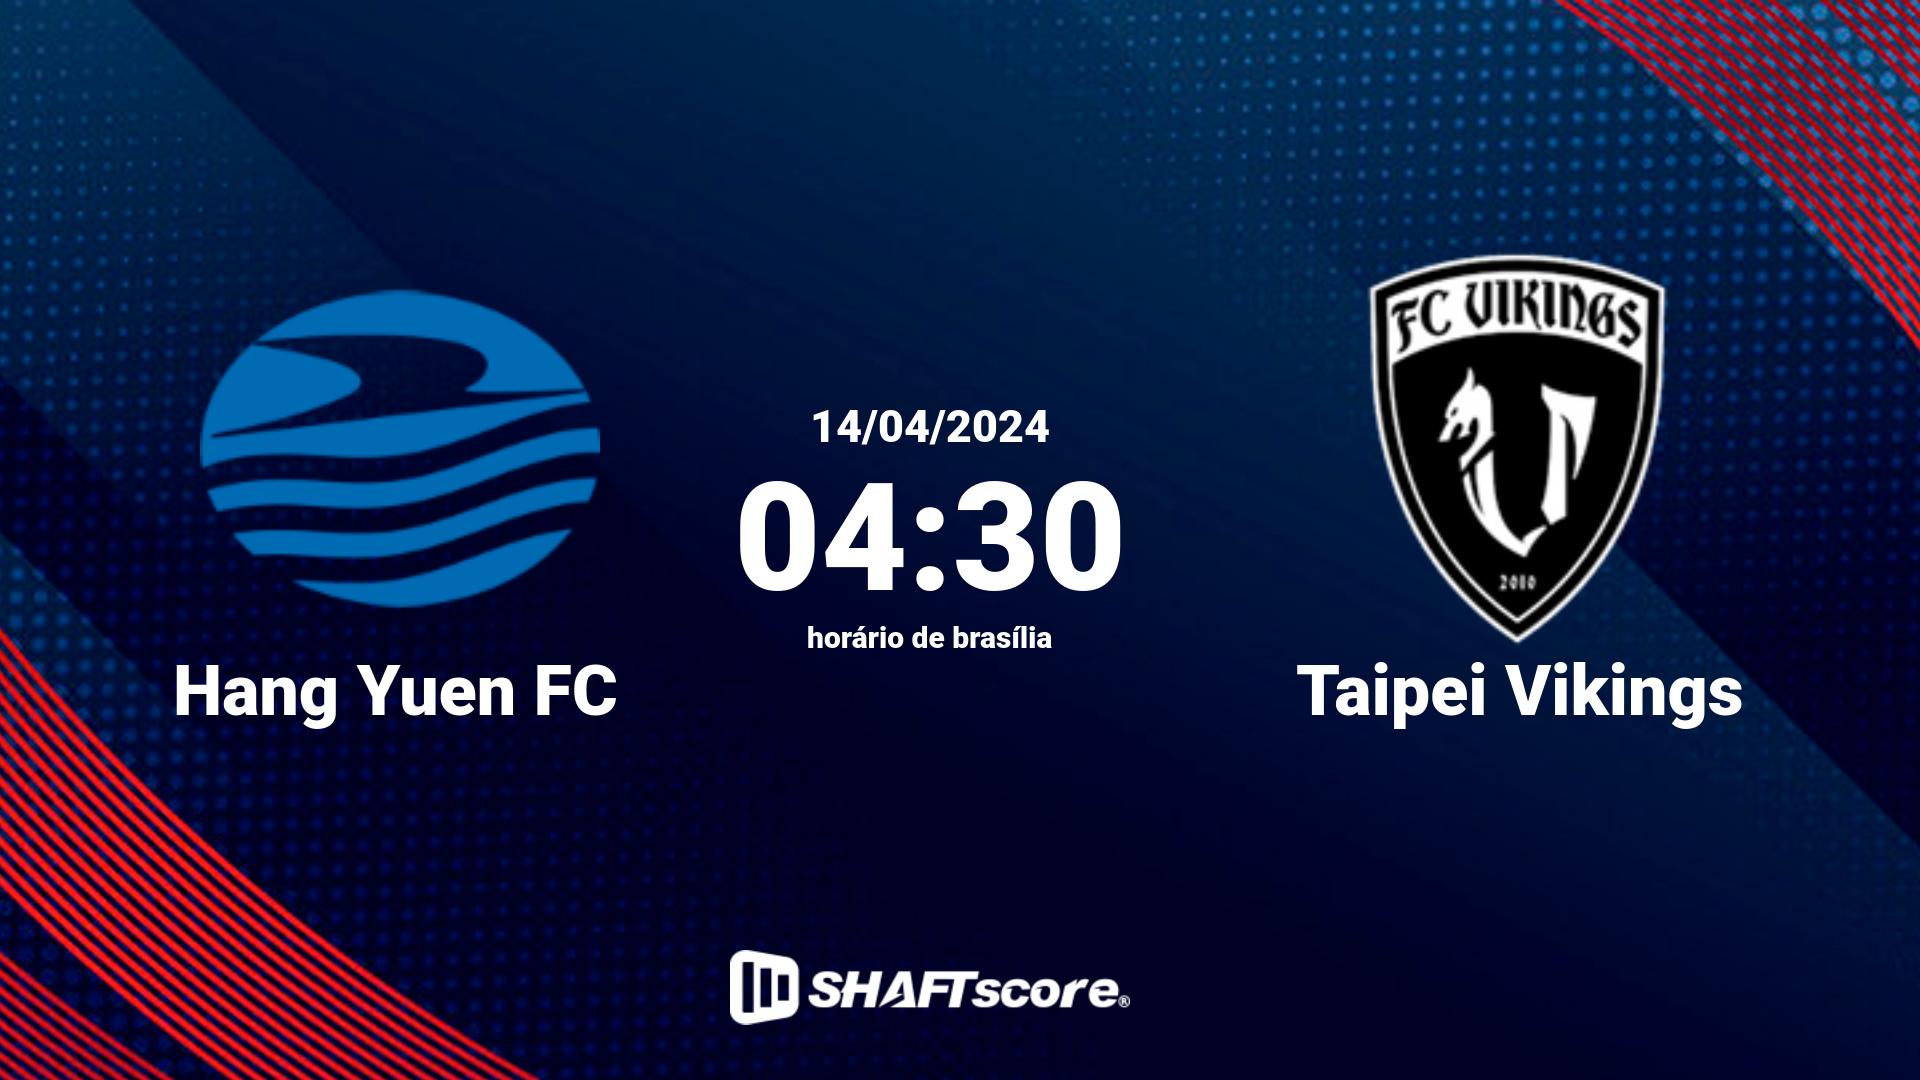 Estatísticas do jogo Hang Yuen FC vs Taipei Vikings 14.04 04:30